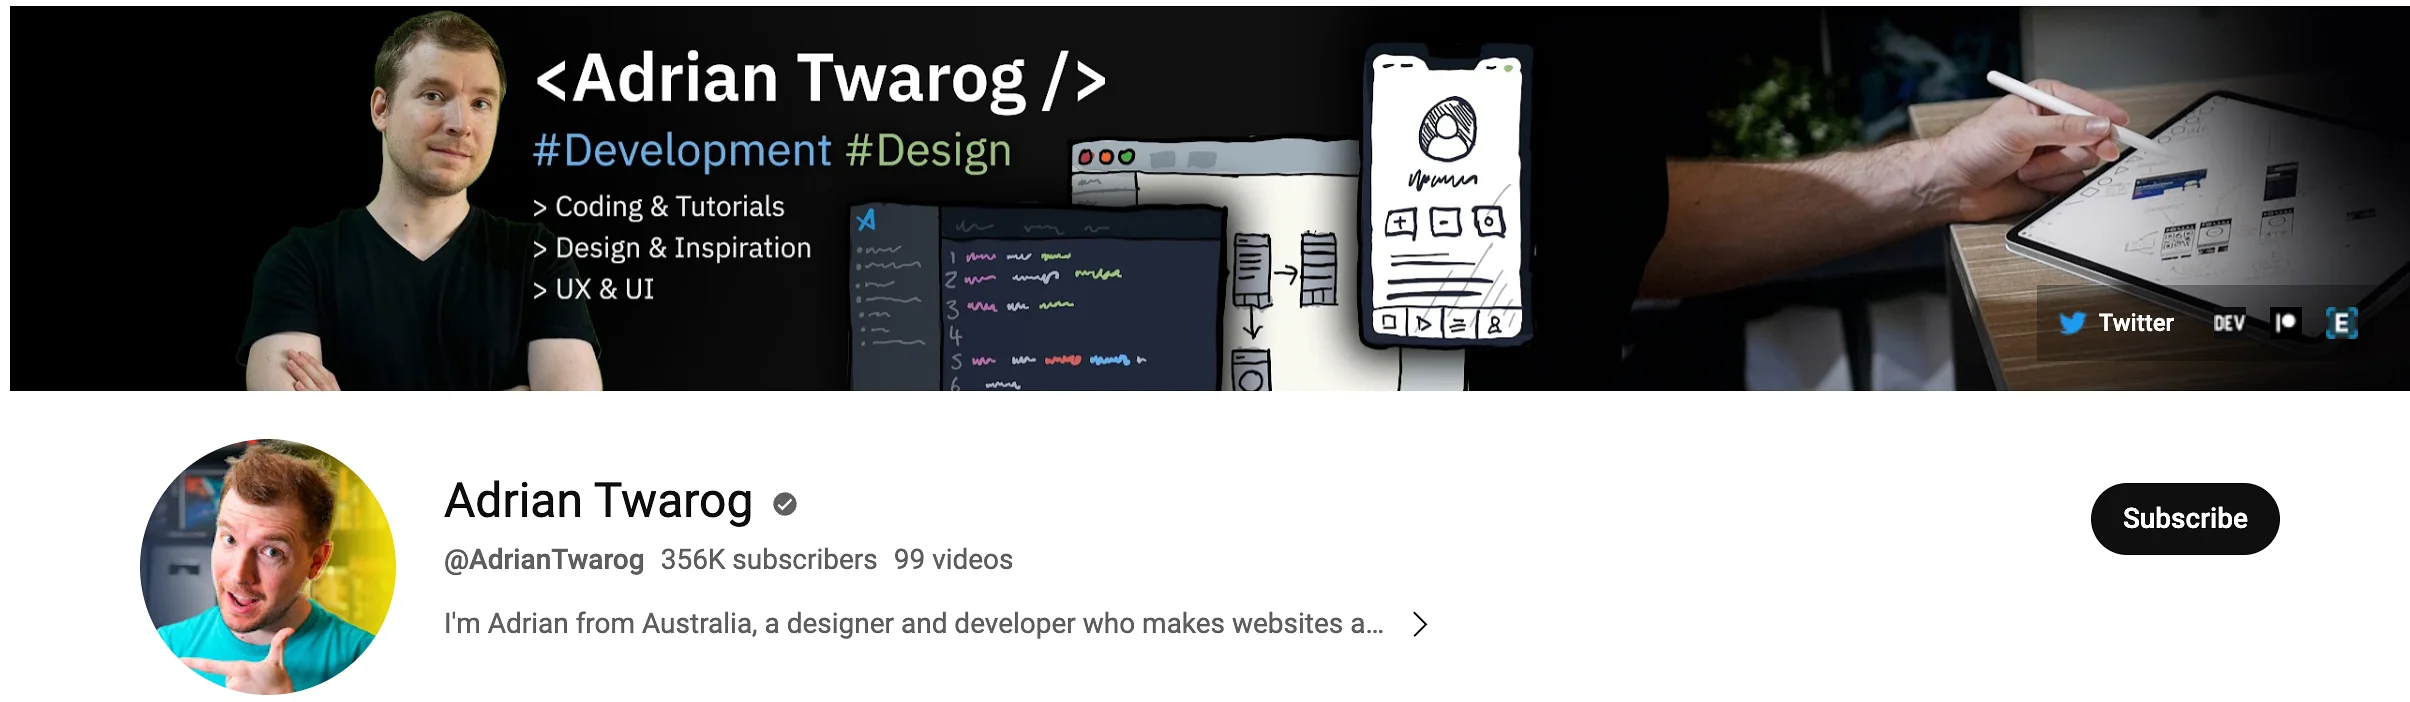 Adrian Twarog - Best Web Design Youtube Channel